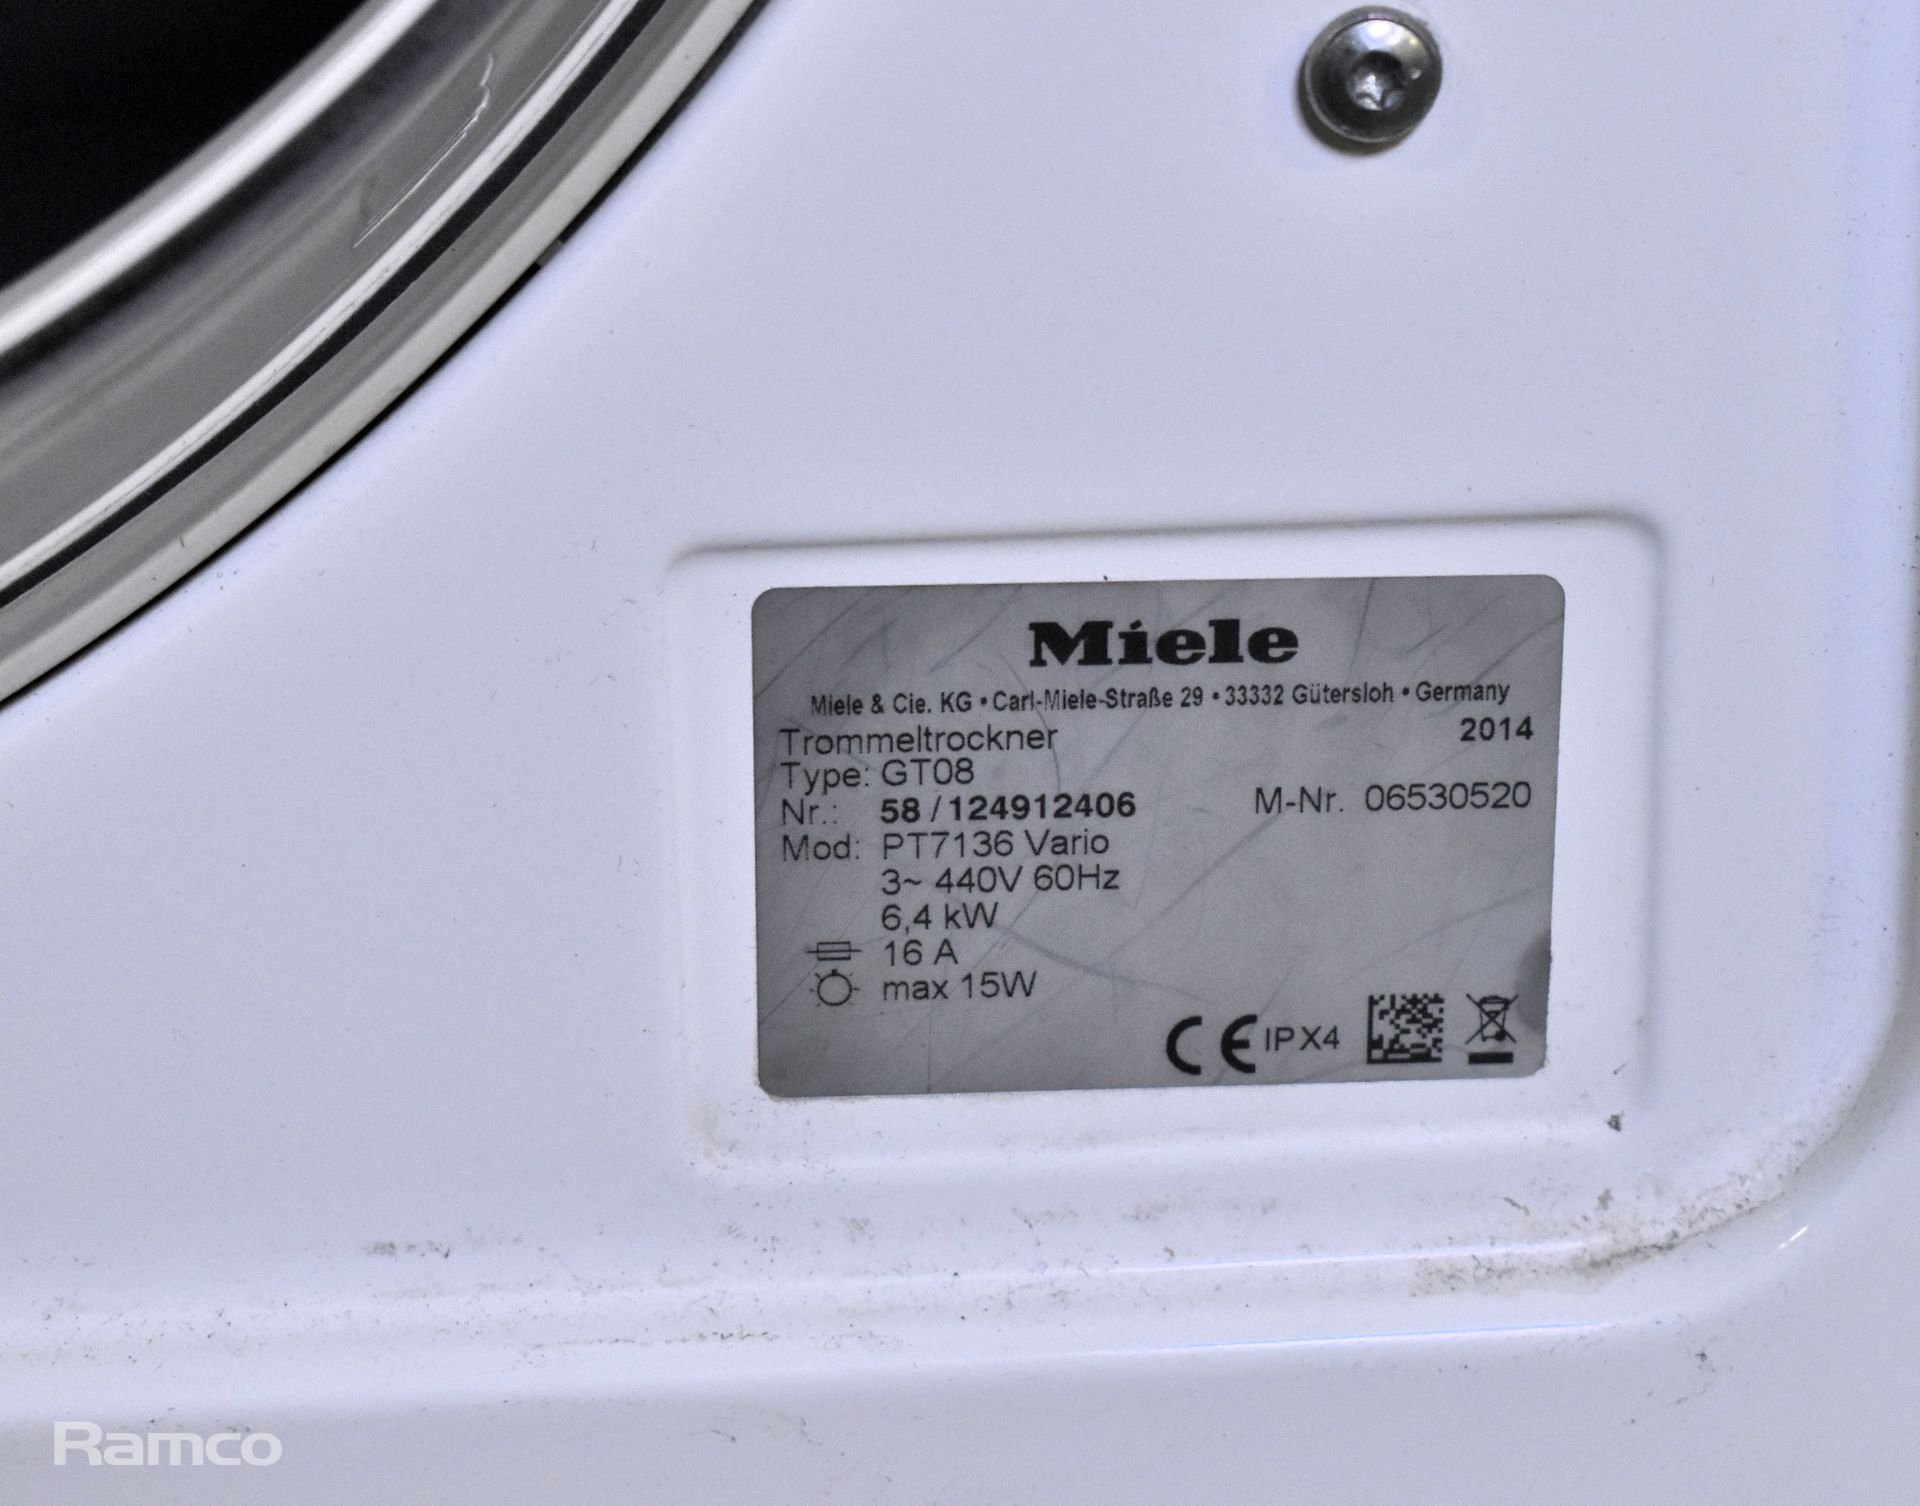 Miele Professional PT 7136 Vario tumble dryer - 400V - W 600 x D 700 x H 850mm - Image 3 of 5